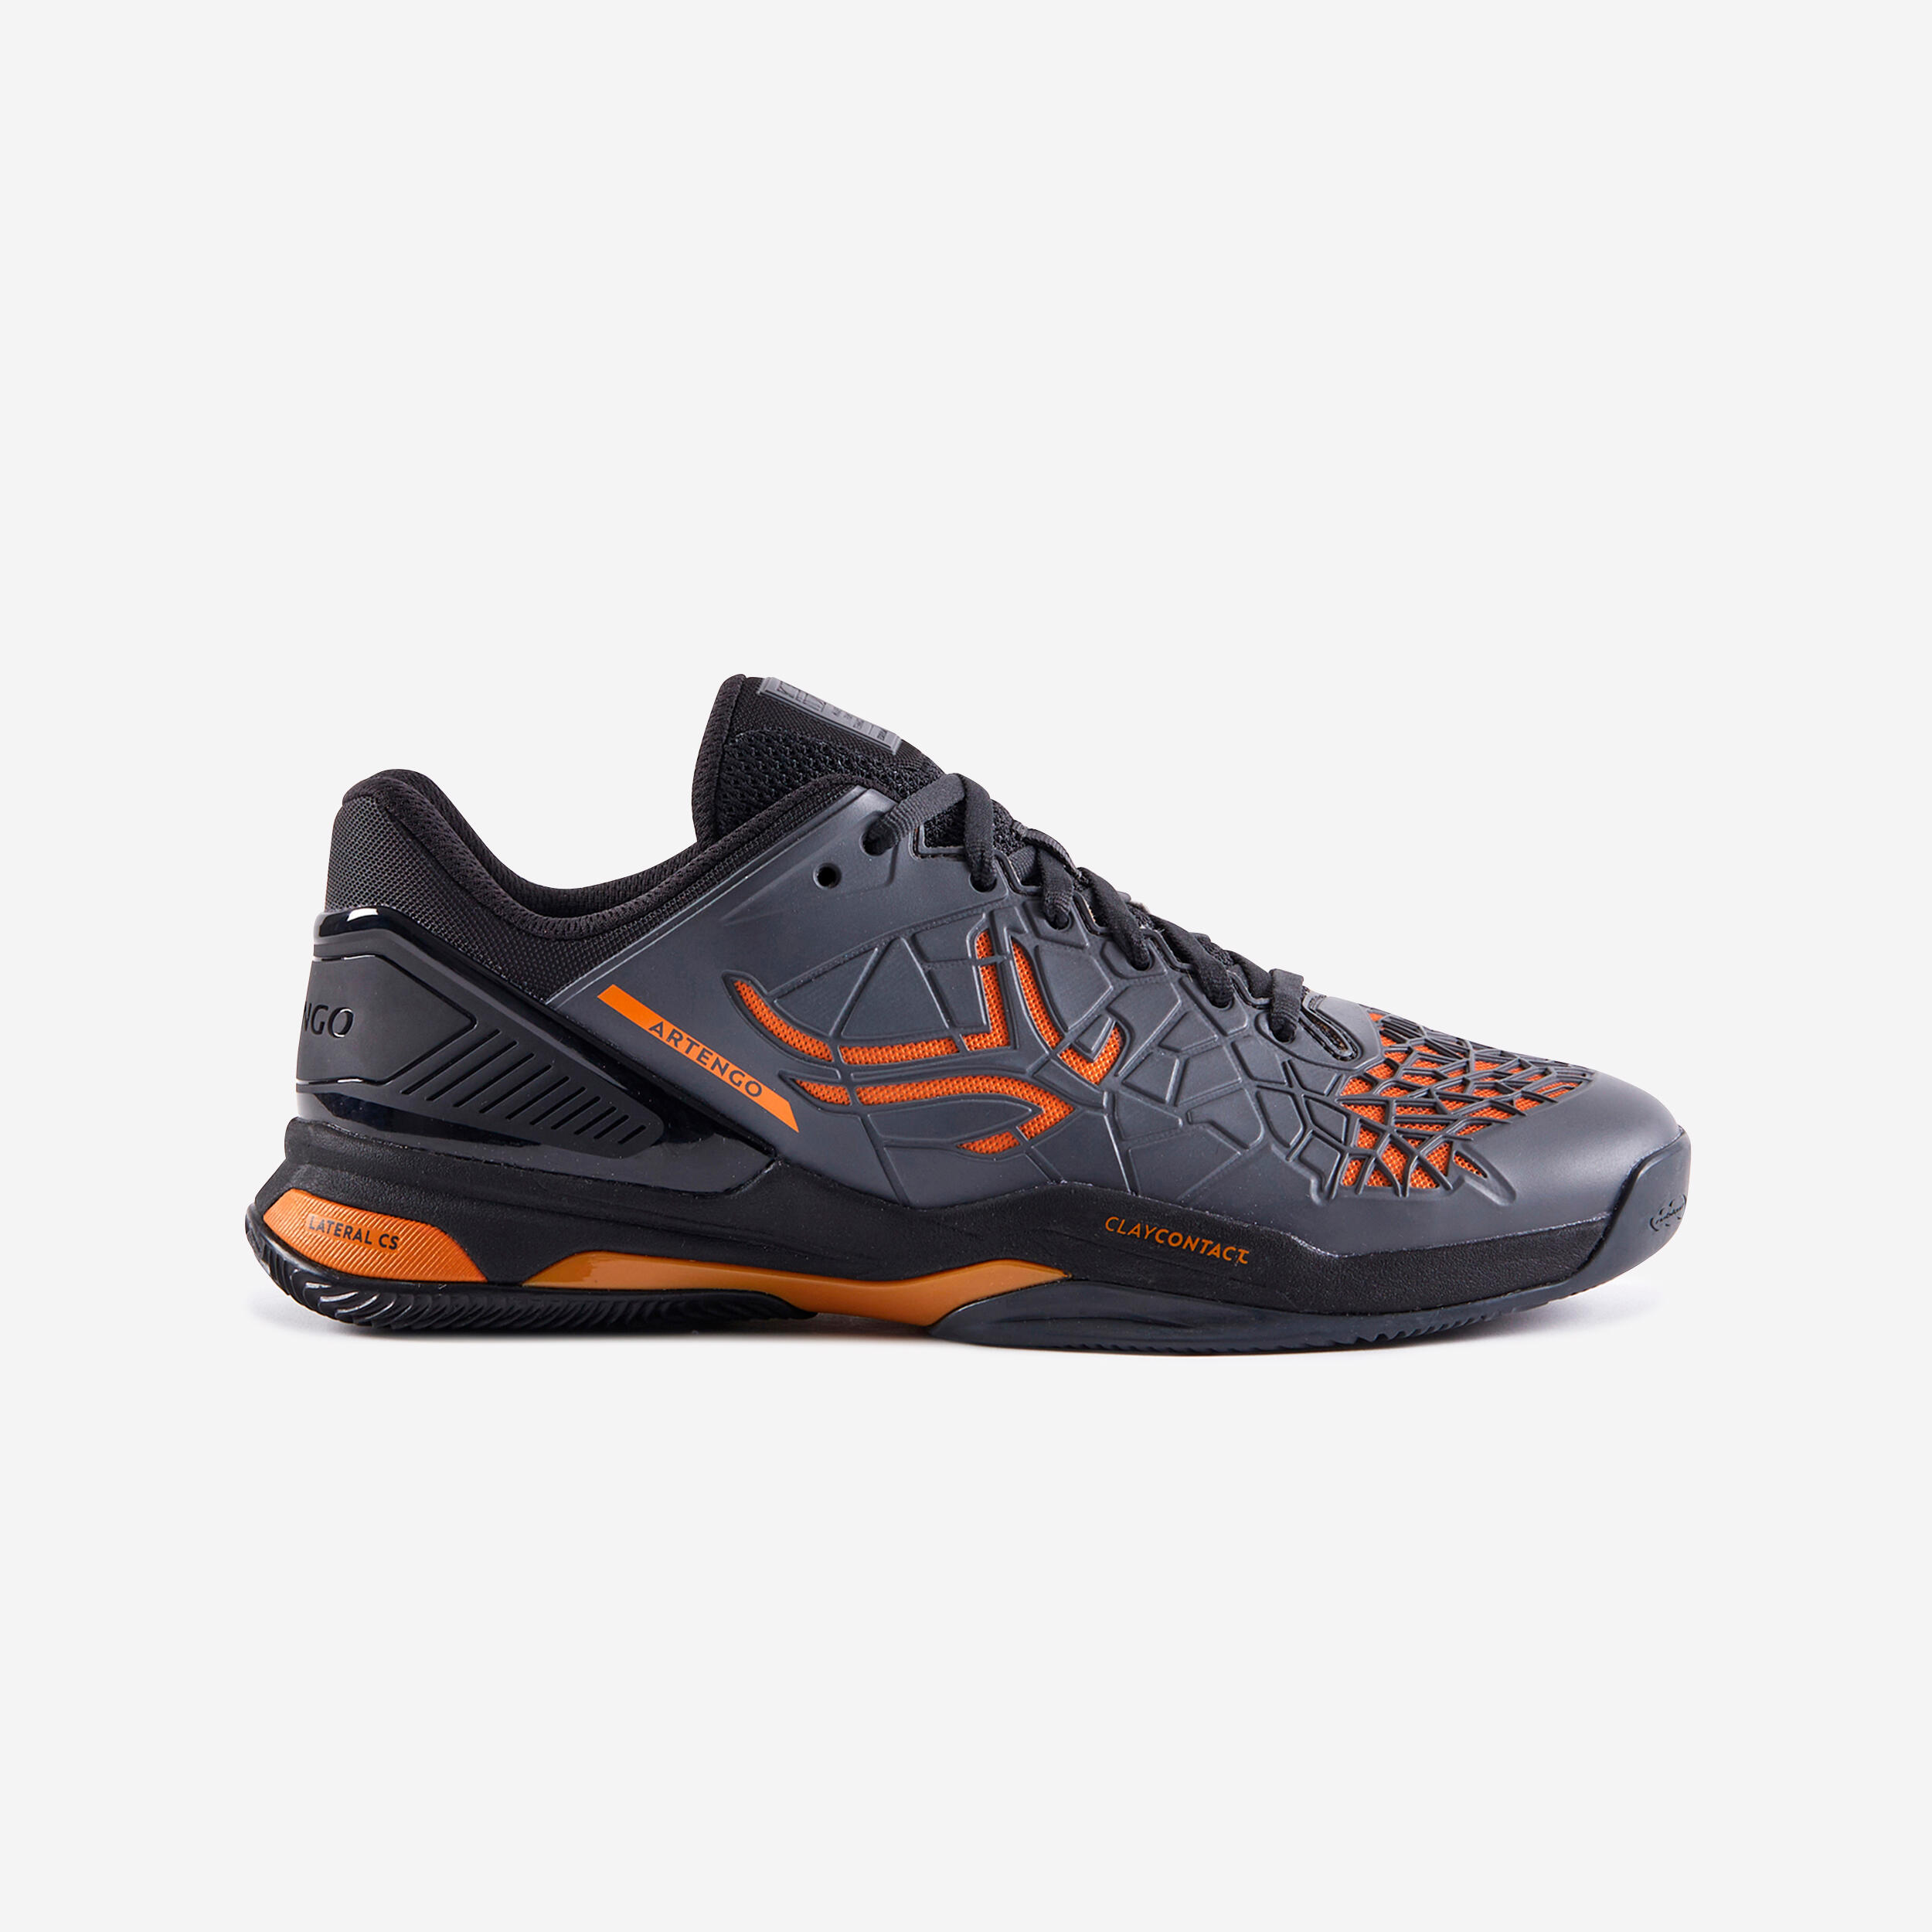 ARTENGO Men's Clay Court Tennis Shoes Strong Pro - Grey/Ochre